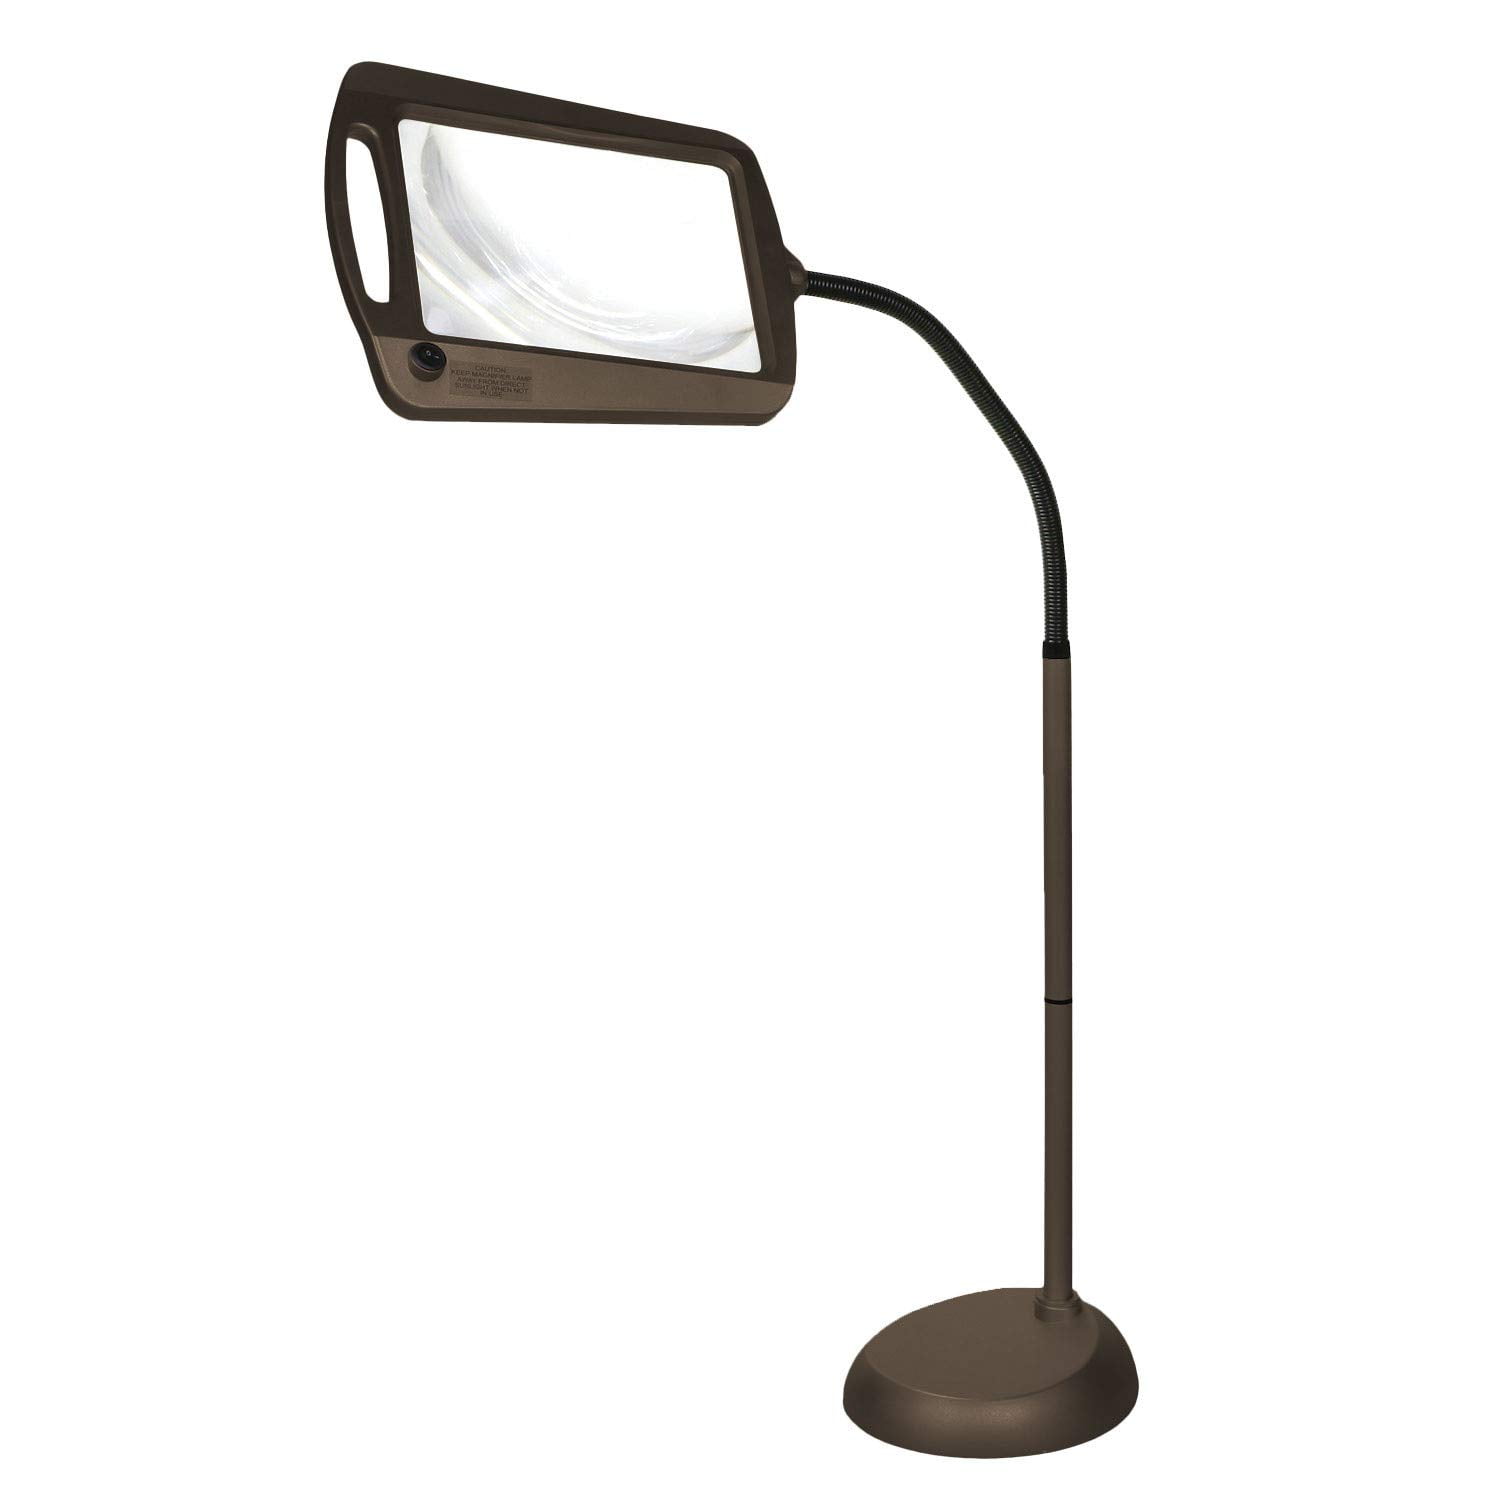 Daylight 24 402039-BRNZ Full Page x 10 Inch LED Illuminated Floor, Bronze  Magnifier Lamp